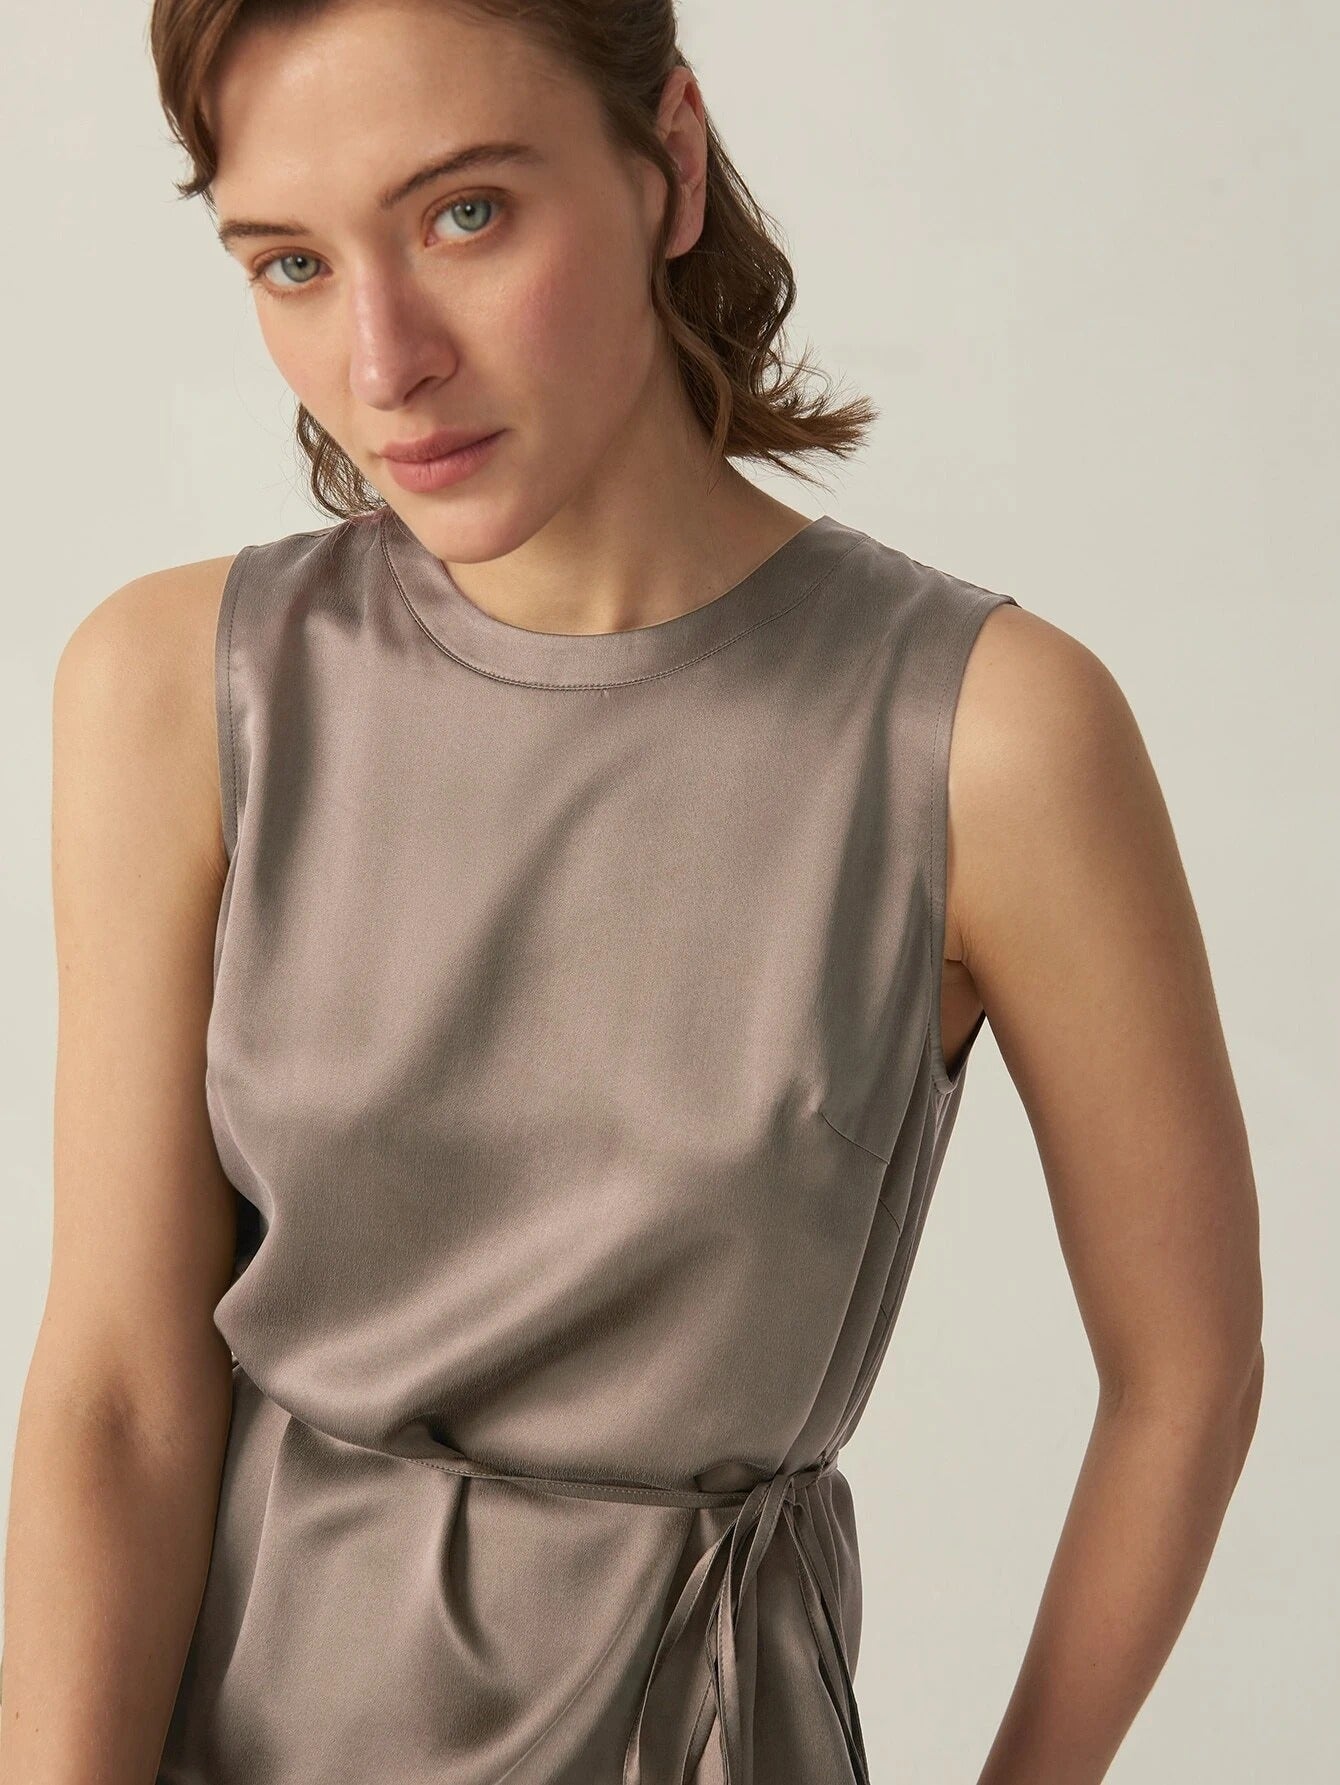 Simple Pure 100% Silk Grade 6a 22mm Sleeveless Dress  With Belts